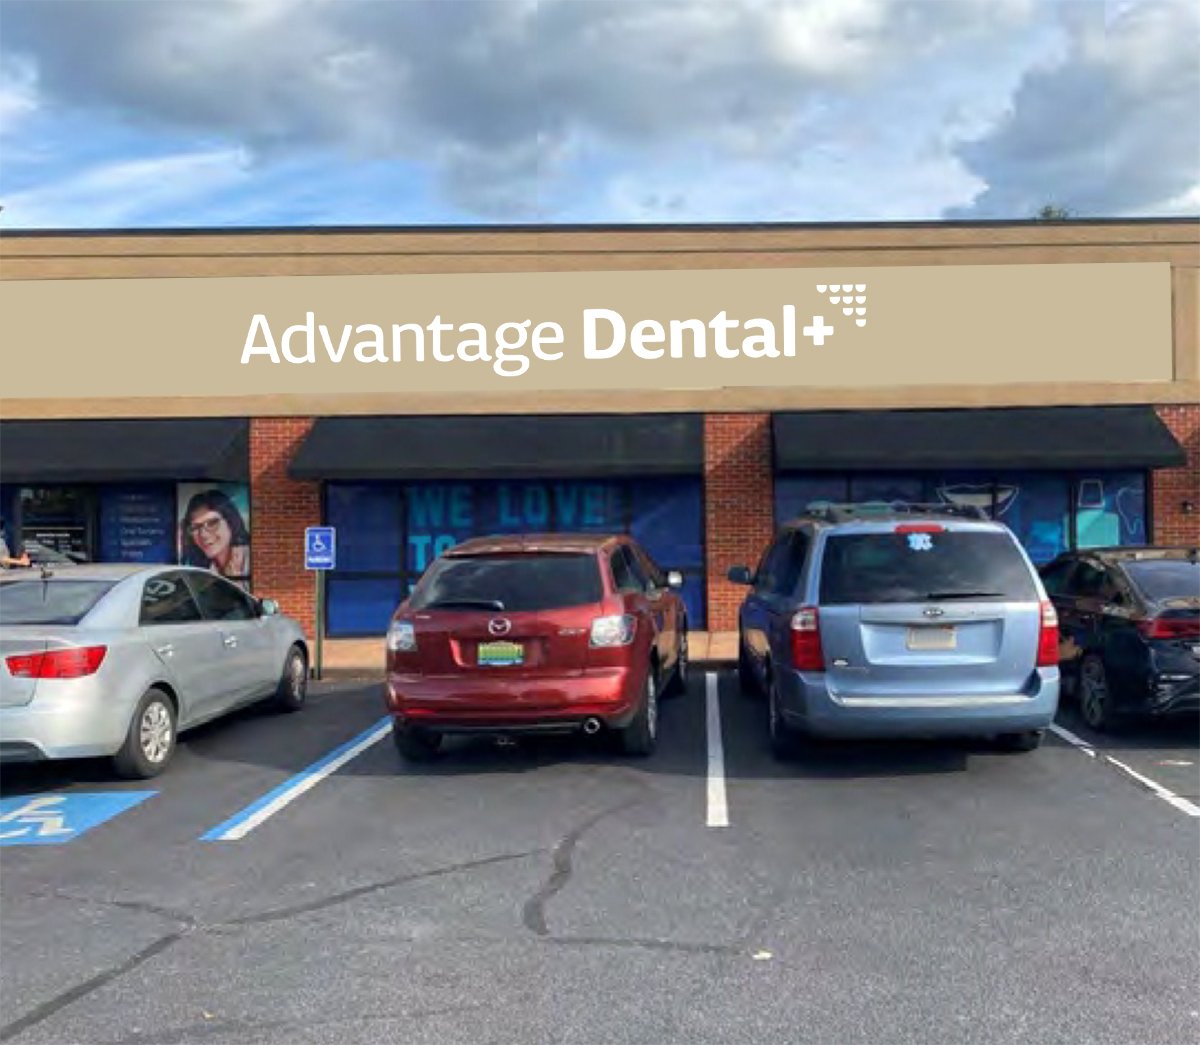 Advantage Dental+ | Dothan, Ala. location exterior